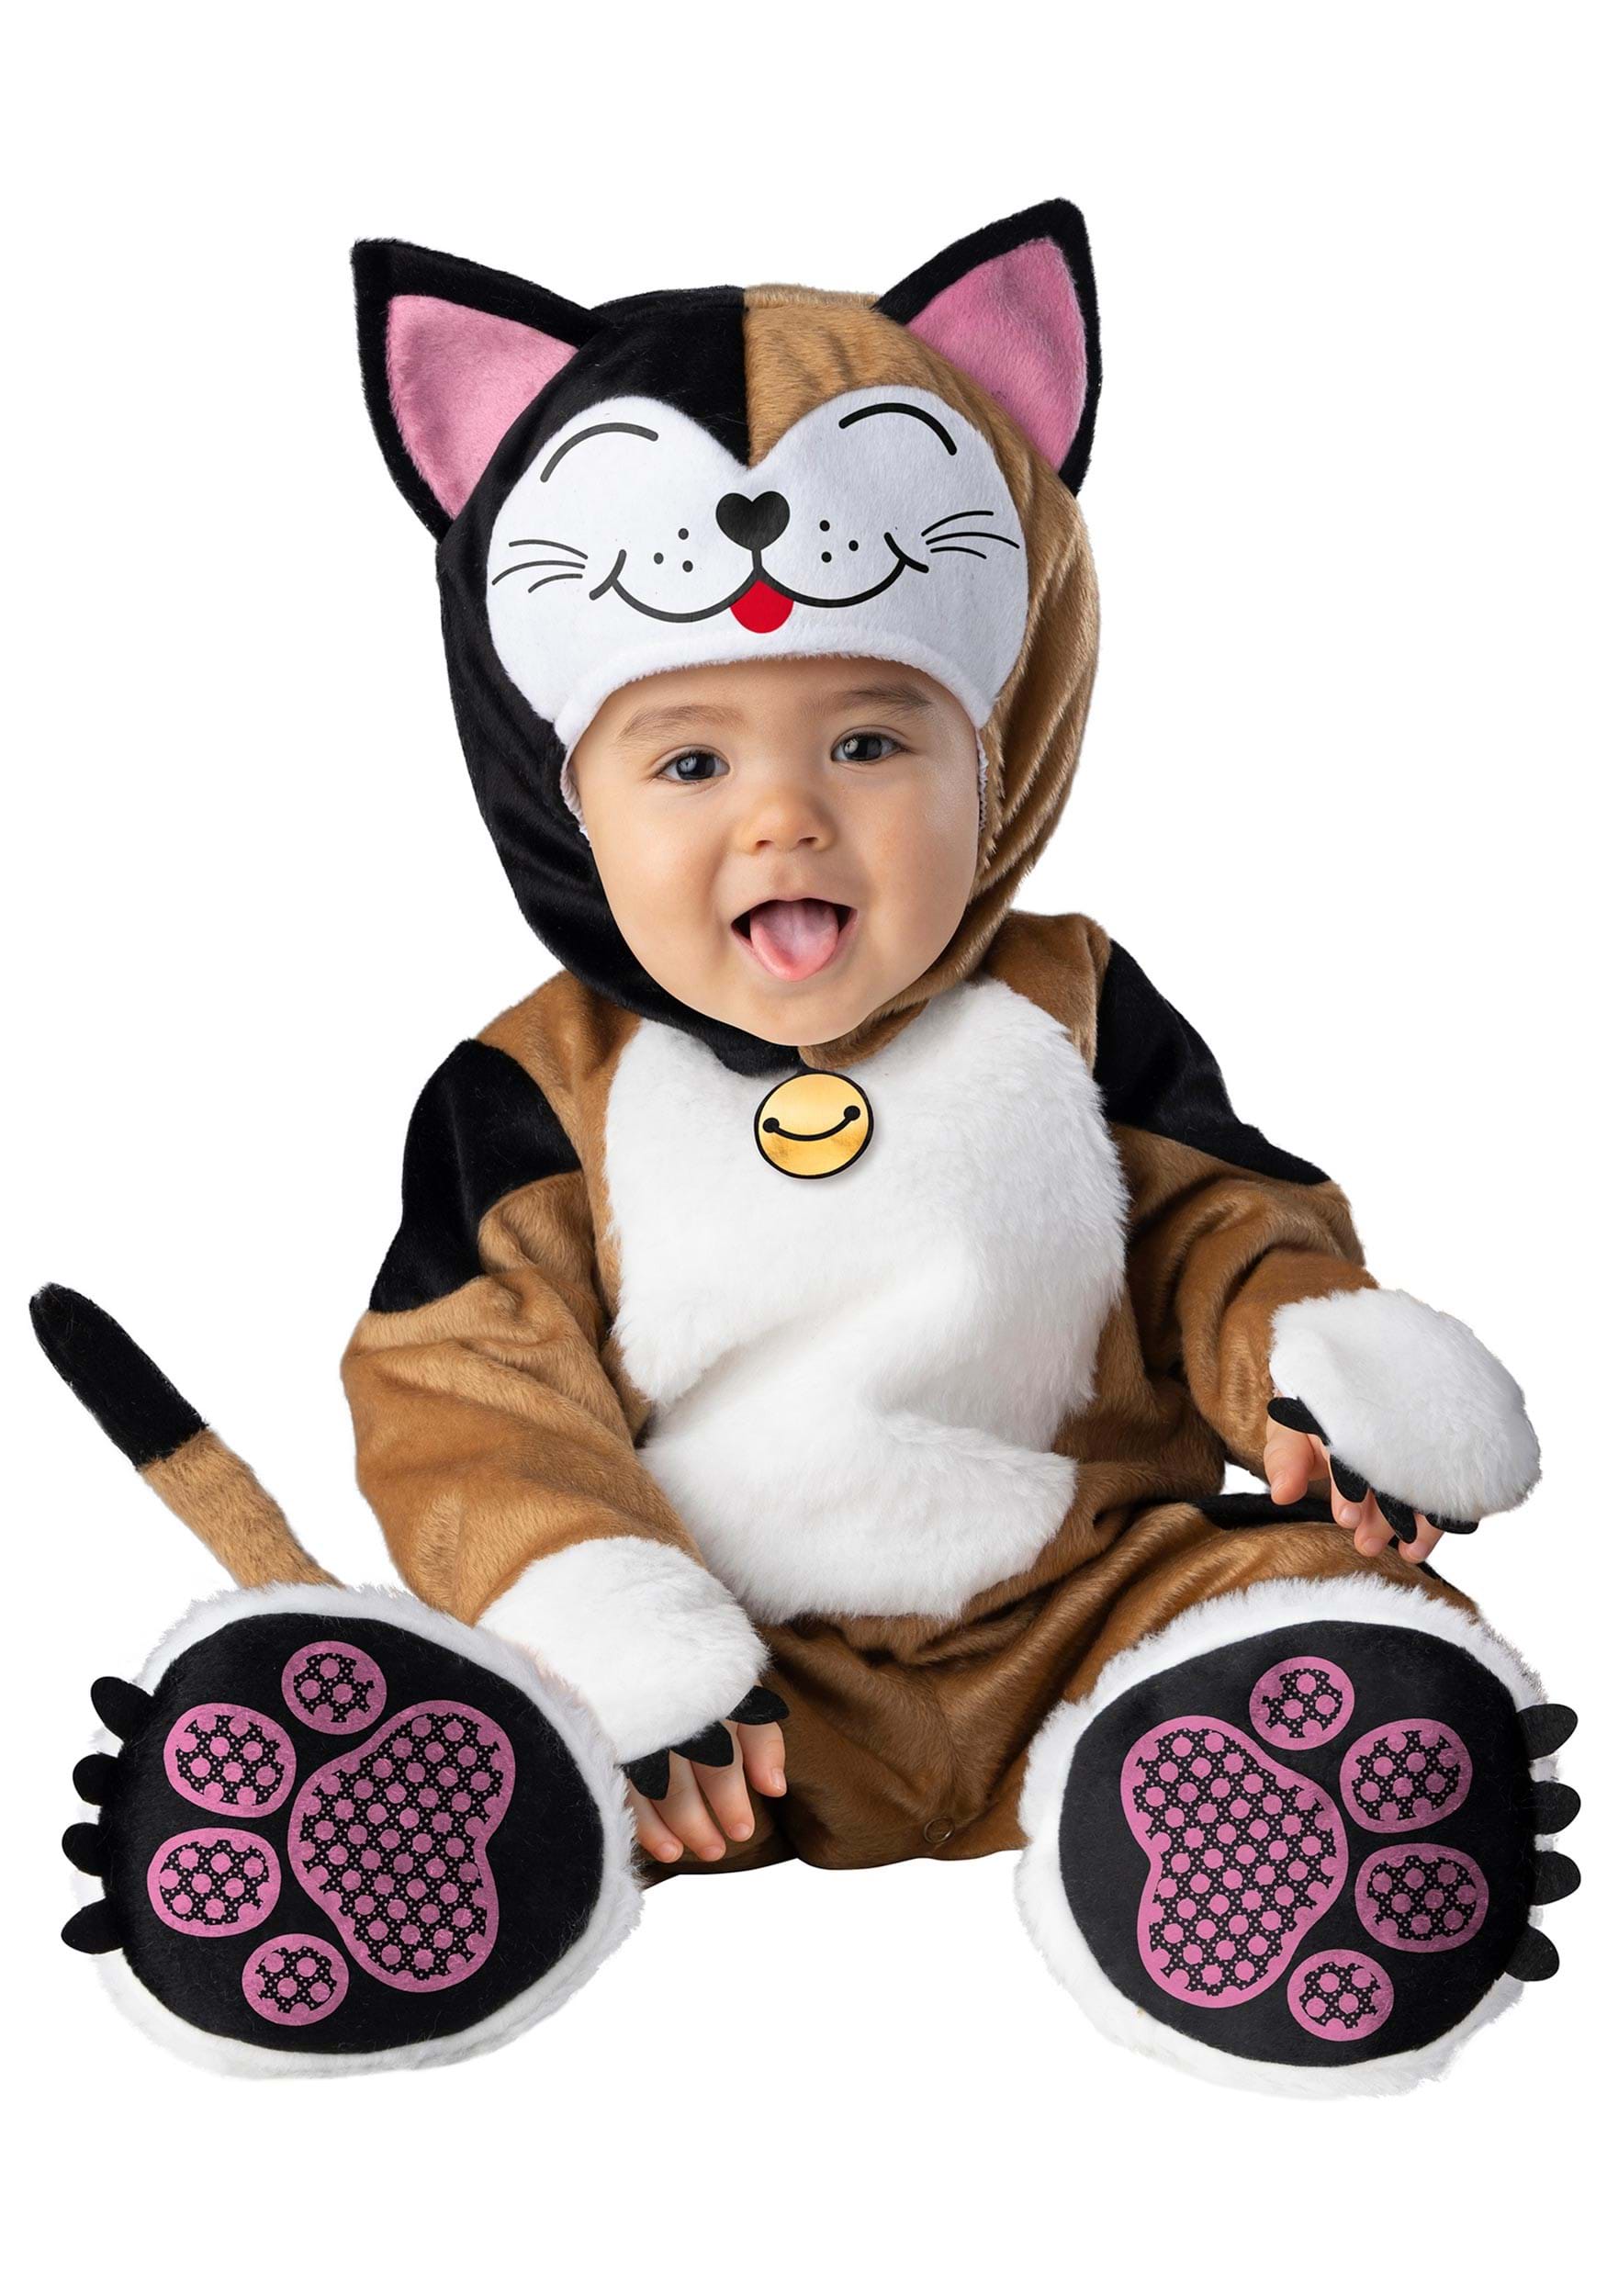 Photos - Fancy Dress CATerpillar Fun World Lil' Cat Infant Costume Black/Pink/Beige INCK6105 